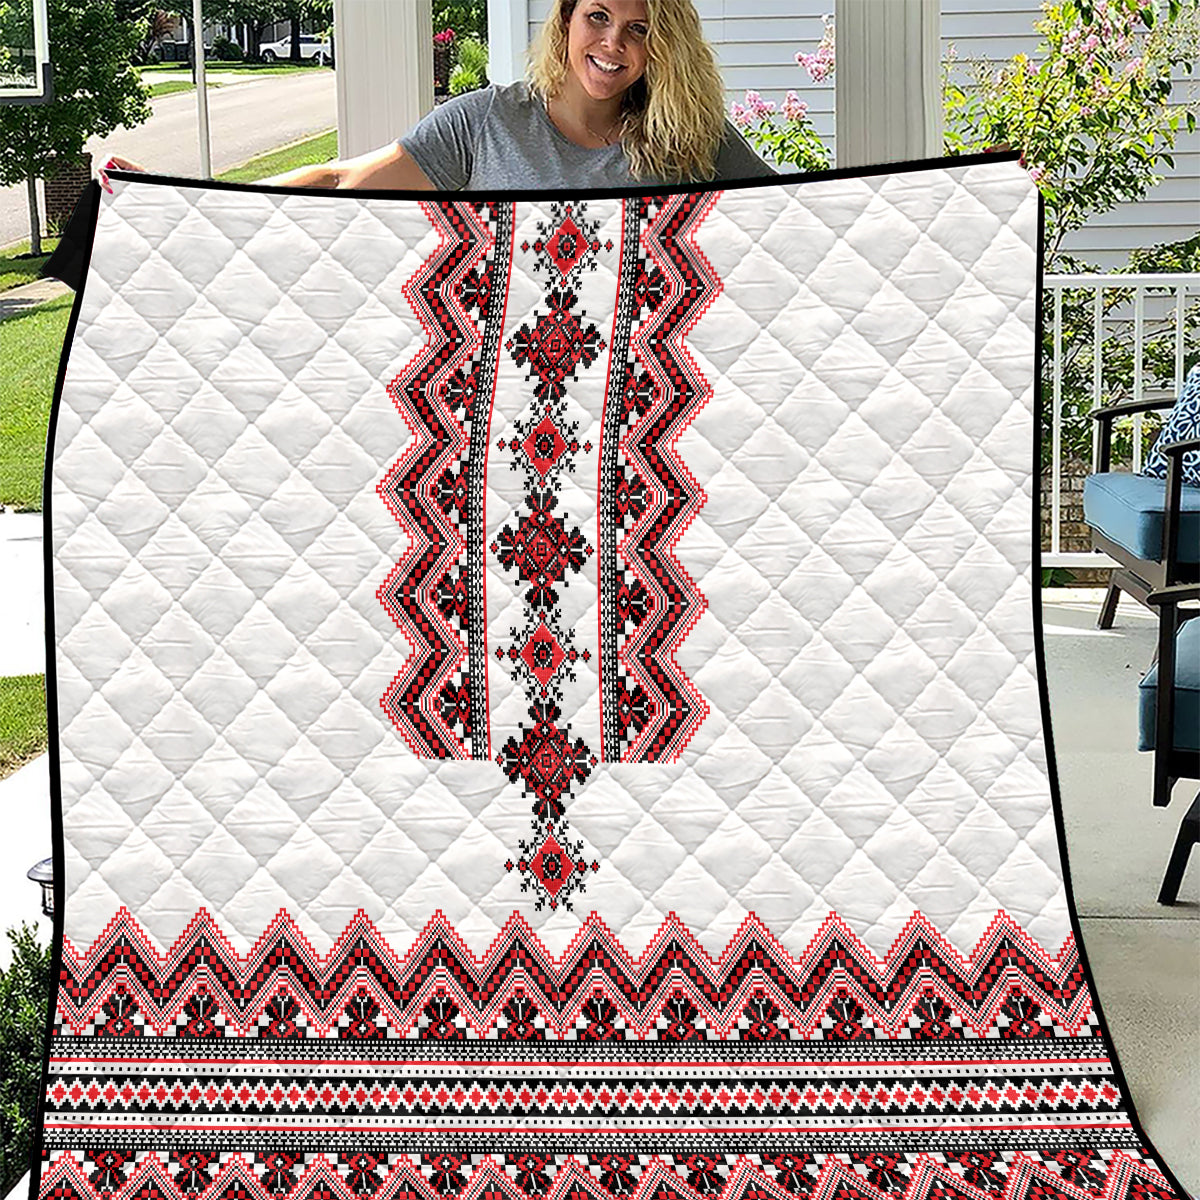 ukraine-folk-pattern-quilt-ukrainian-traditional-version